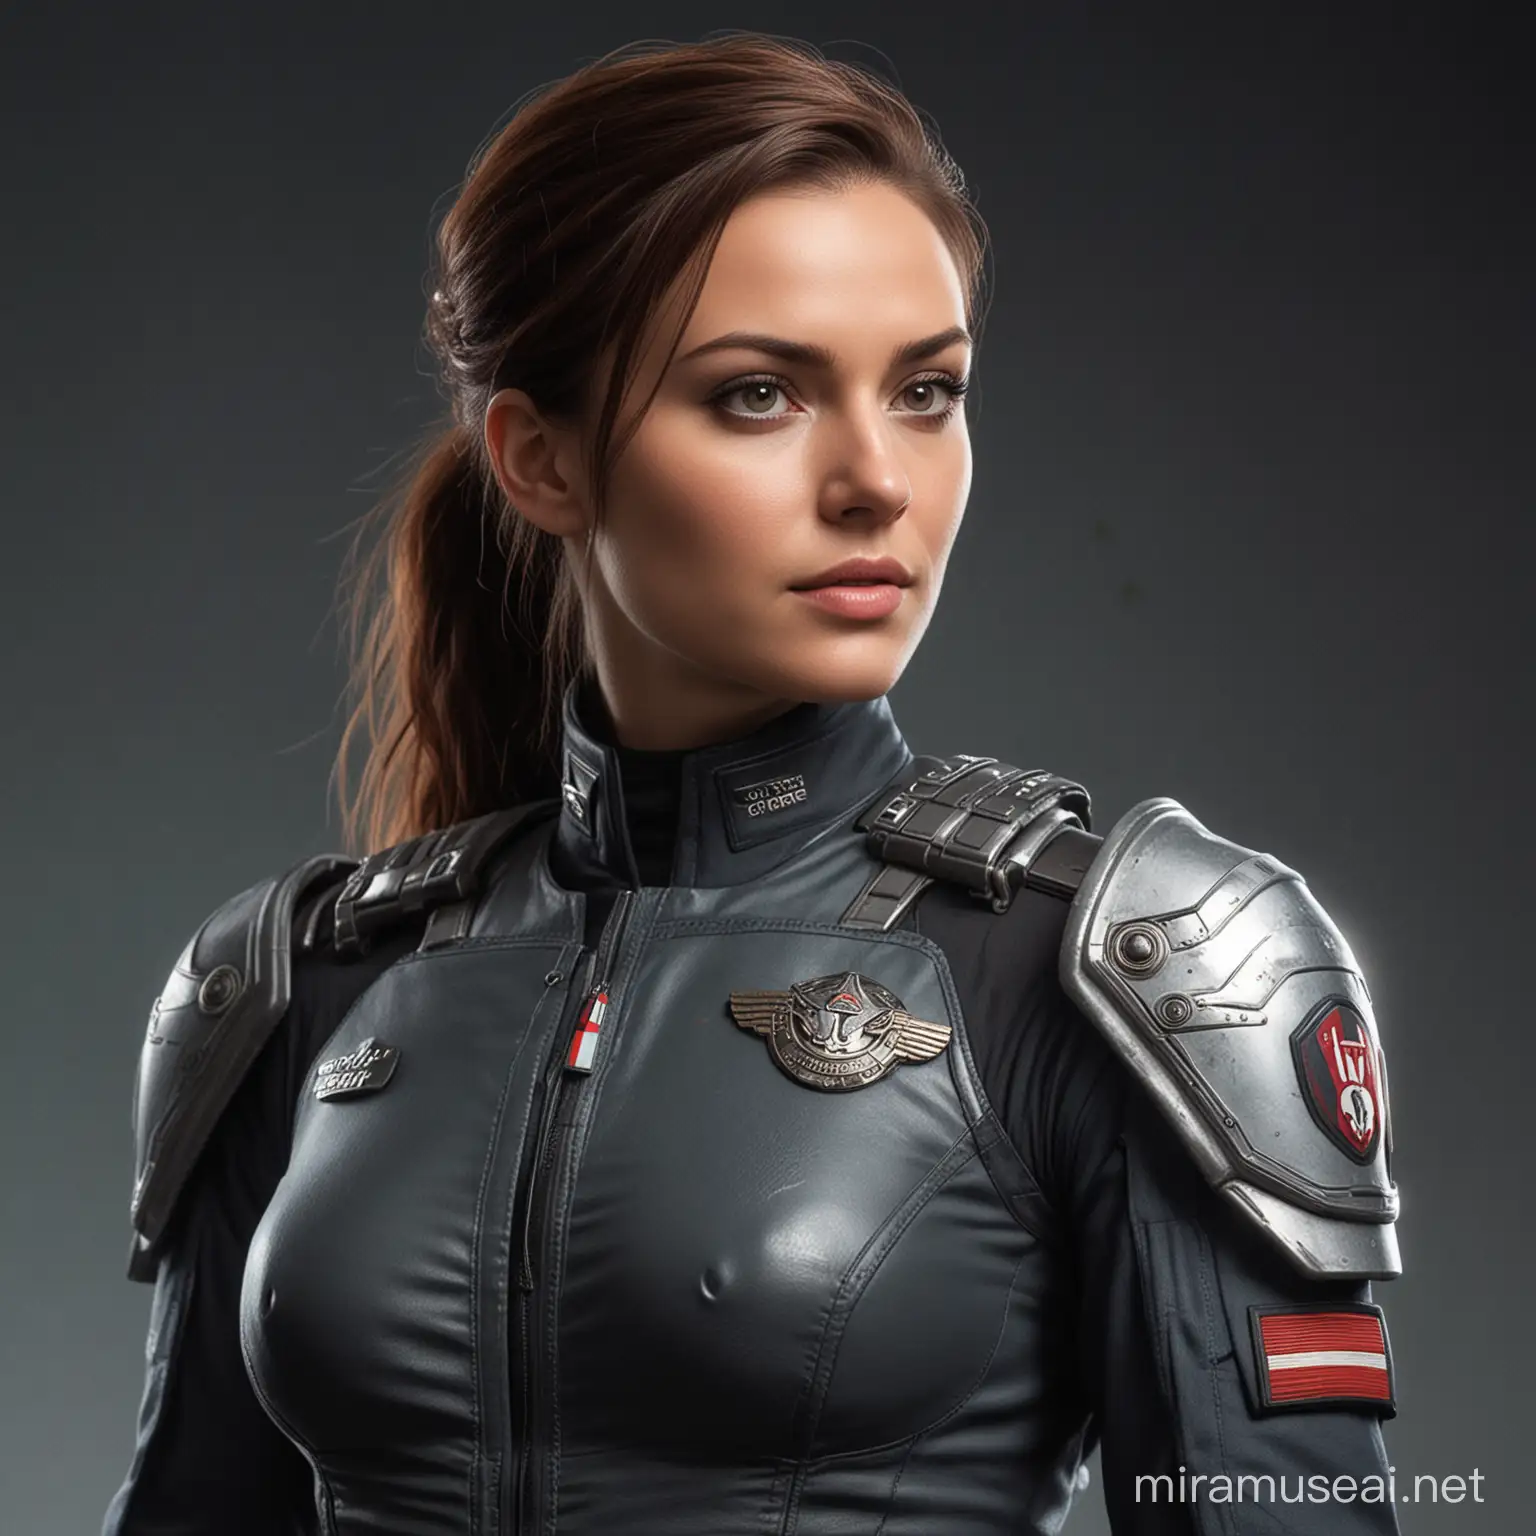 Female Enclave Officer in SciFi Armor